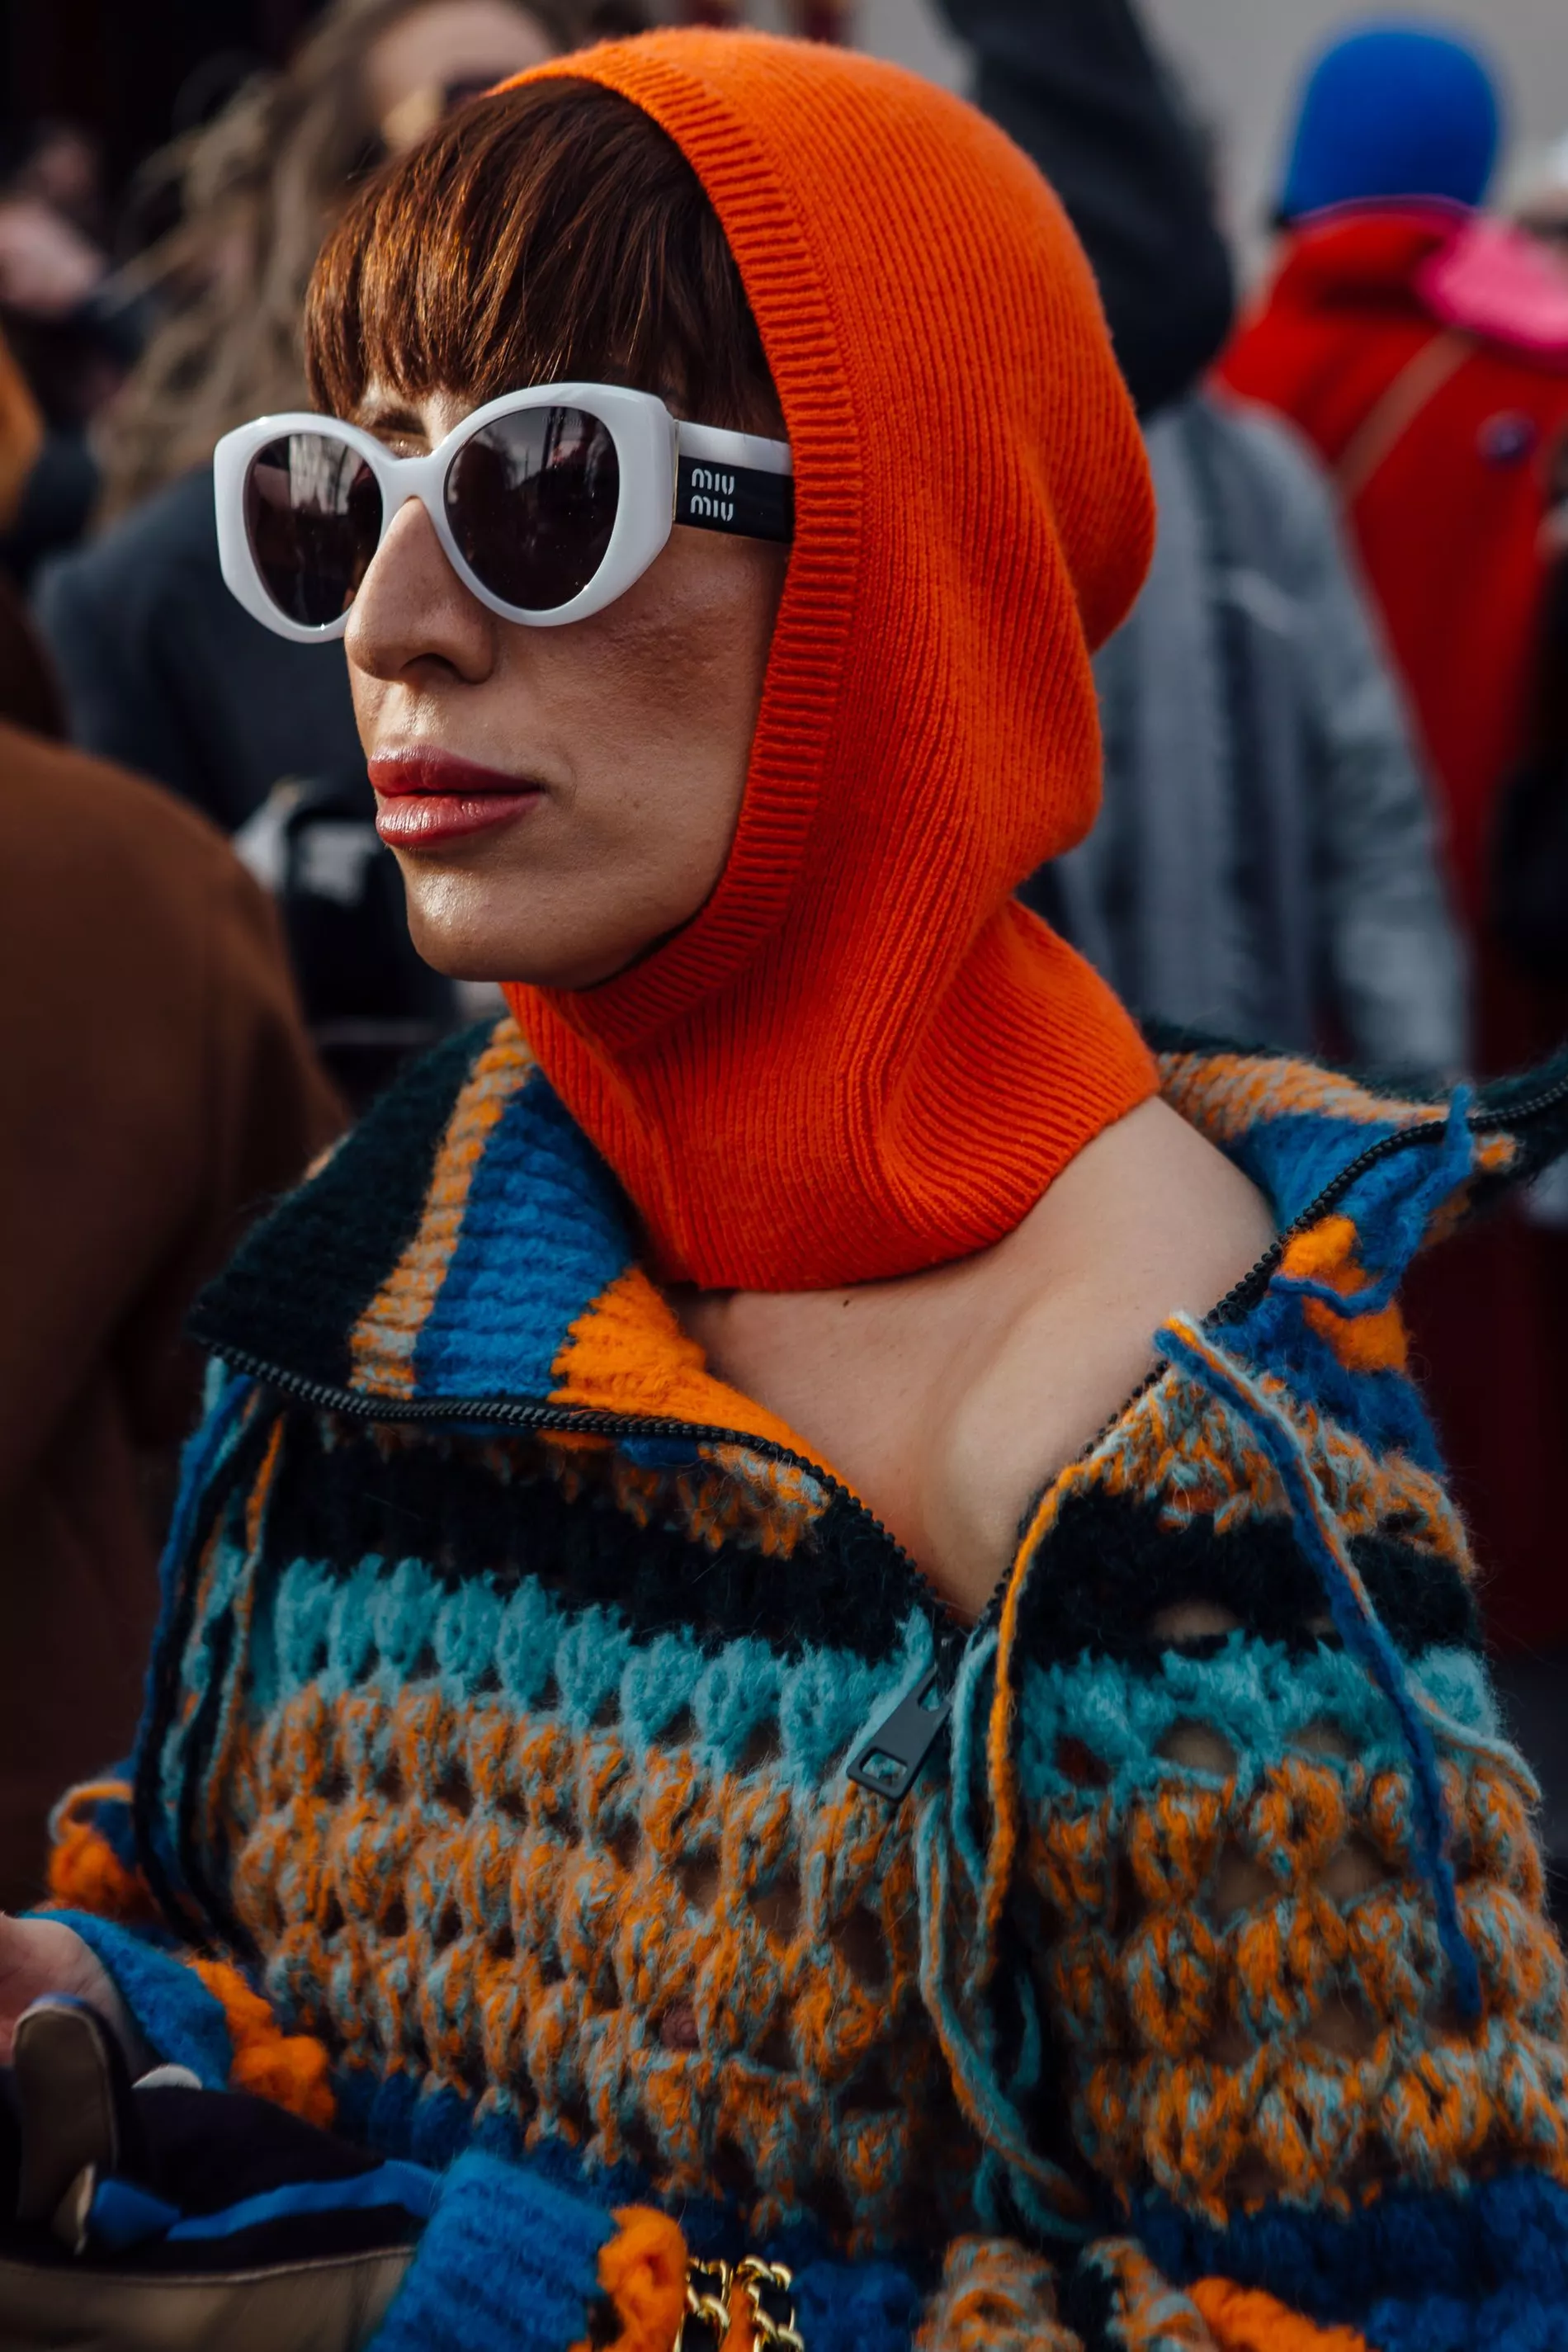 A guest wears Miu Miu sunglasses, an orange balaclava and a multi-coloured knitted top